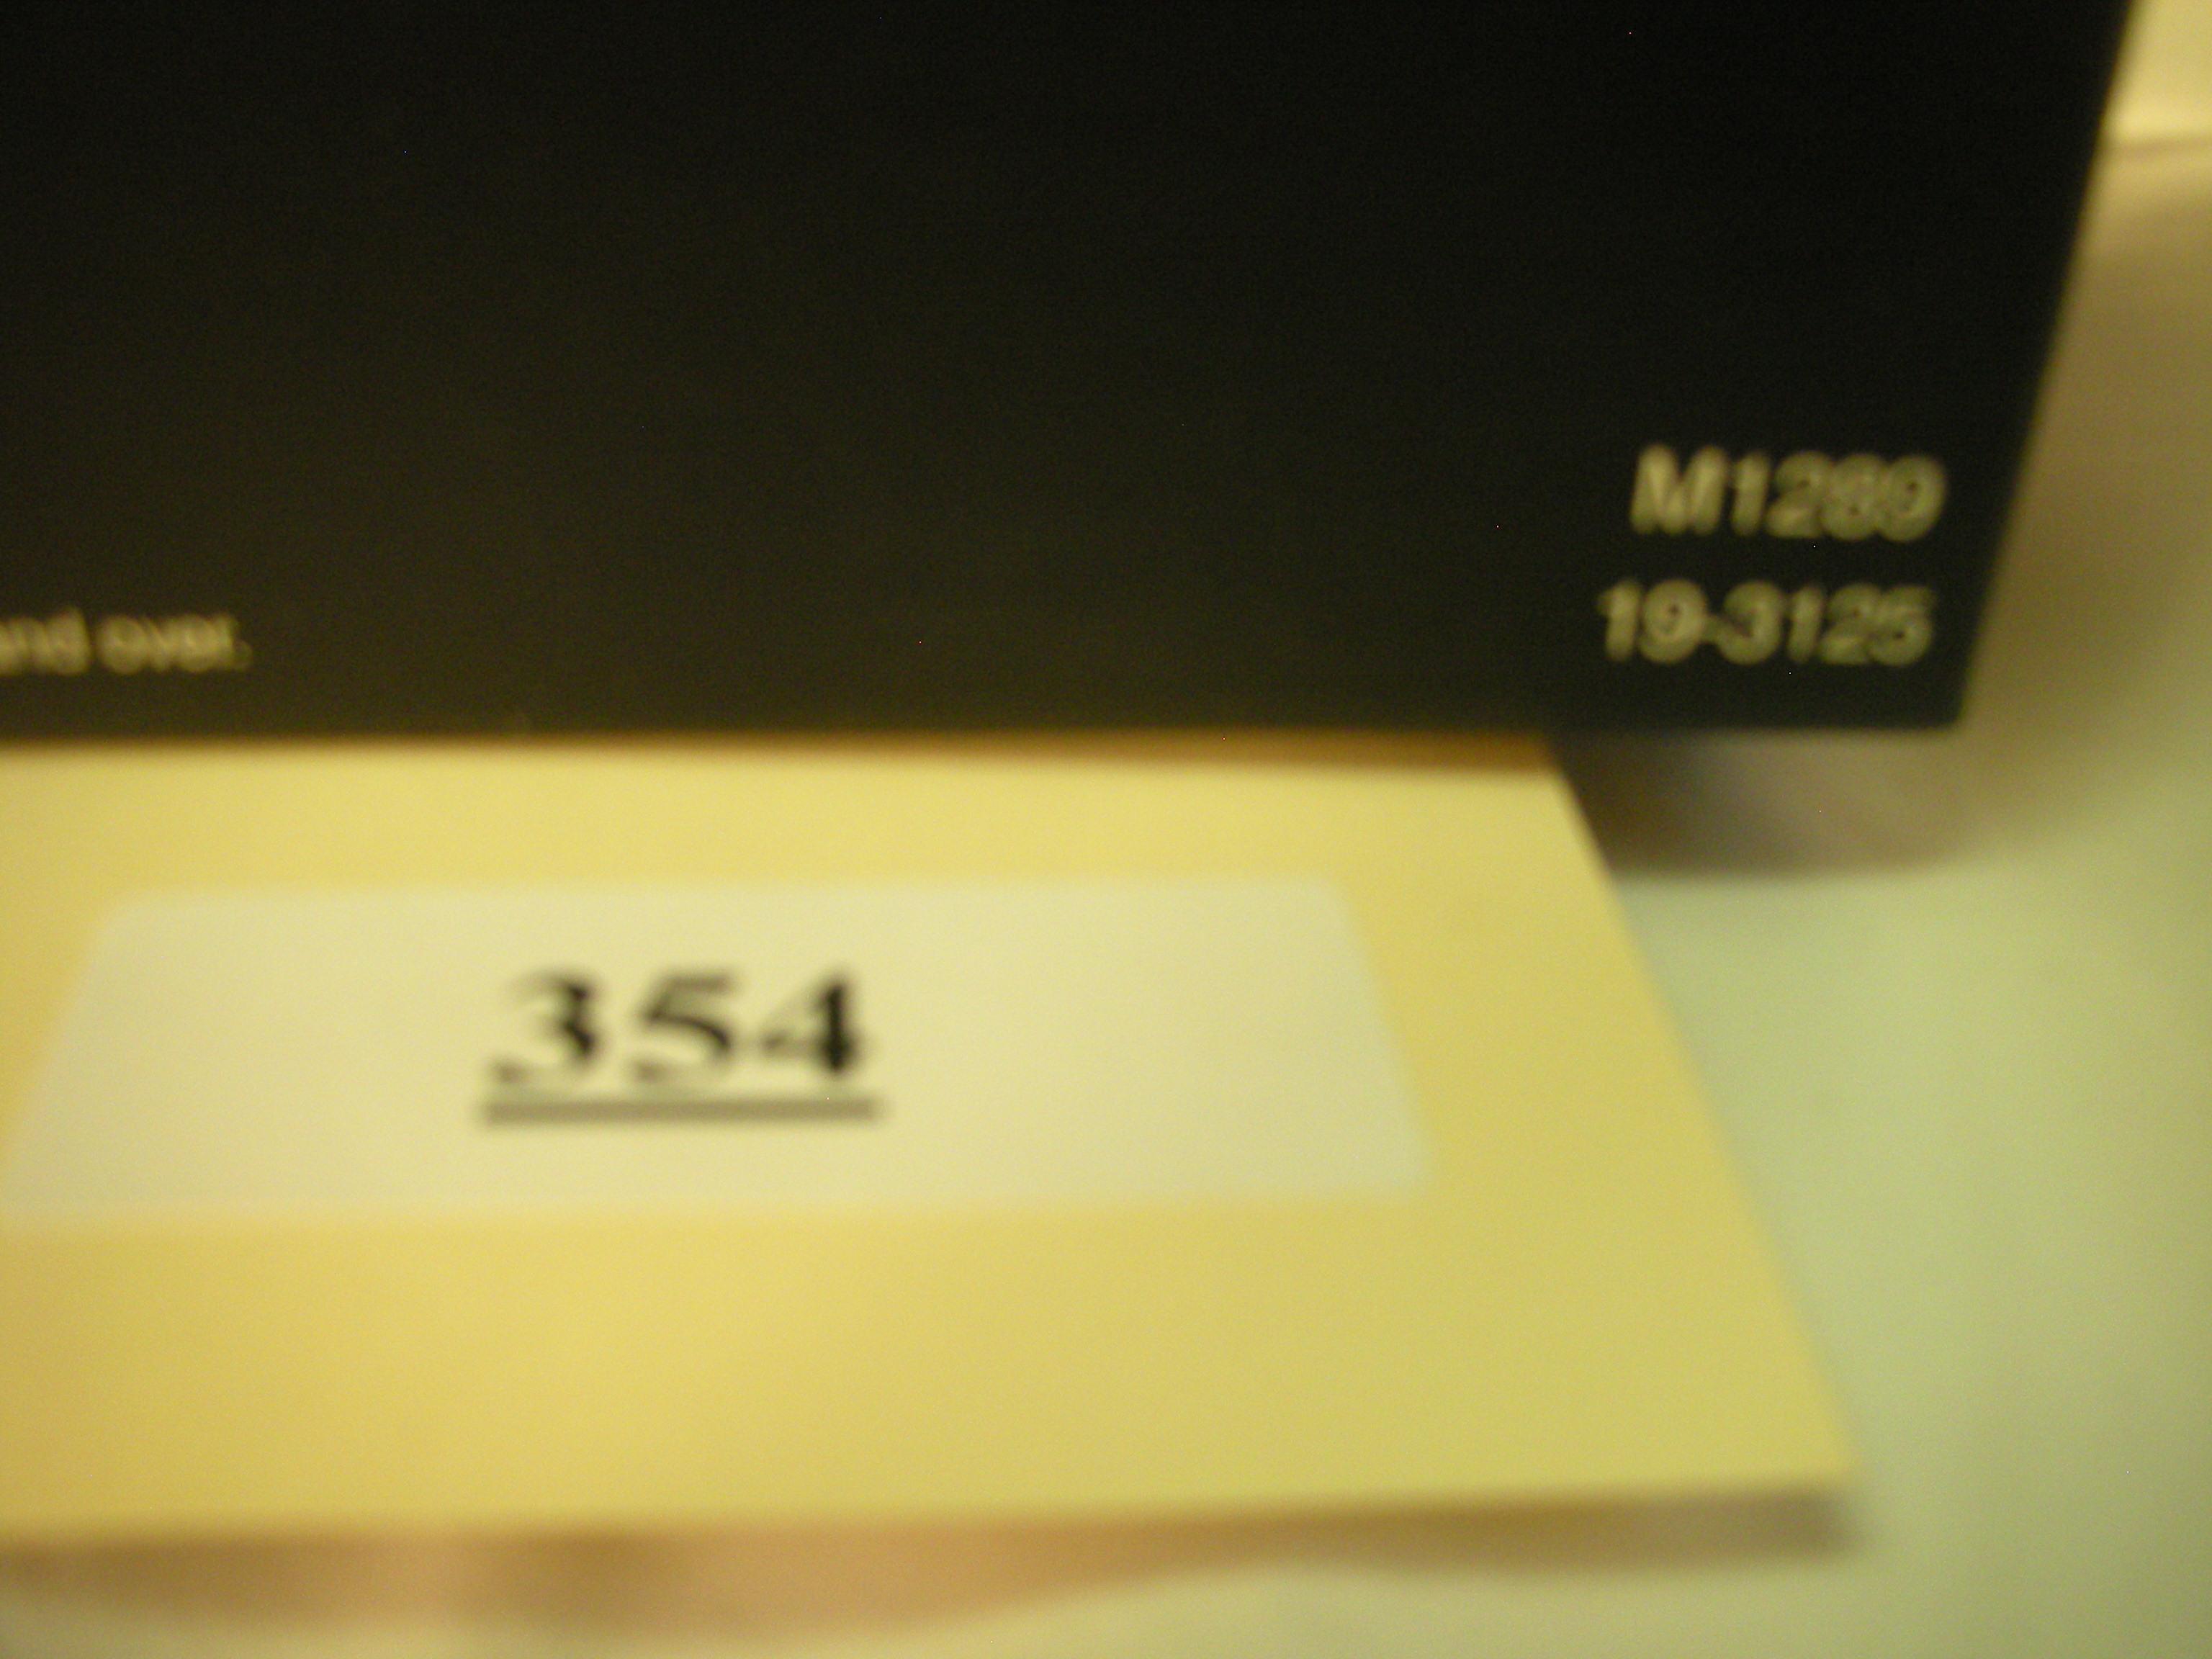 FIRST GEAR Mack Granite Gold Edition #19-3125